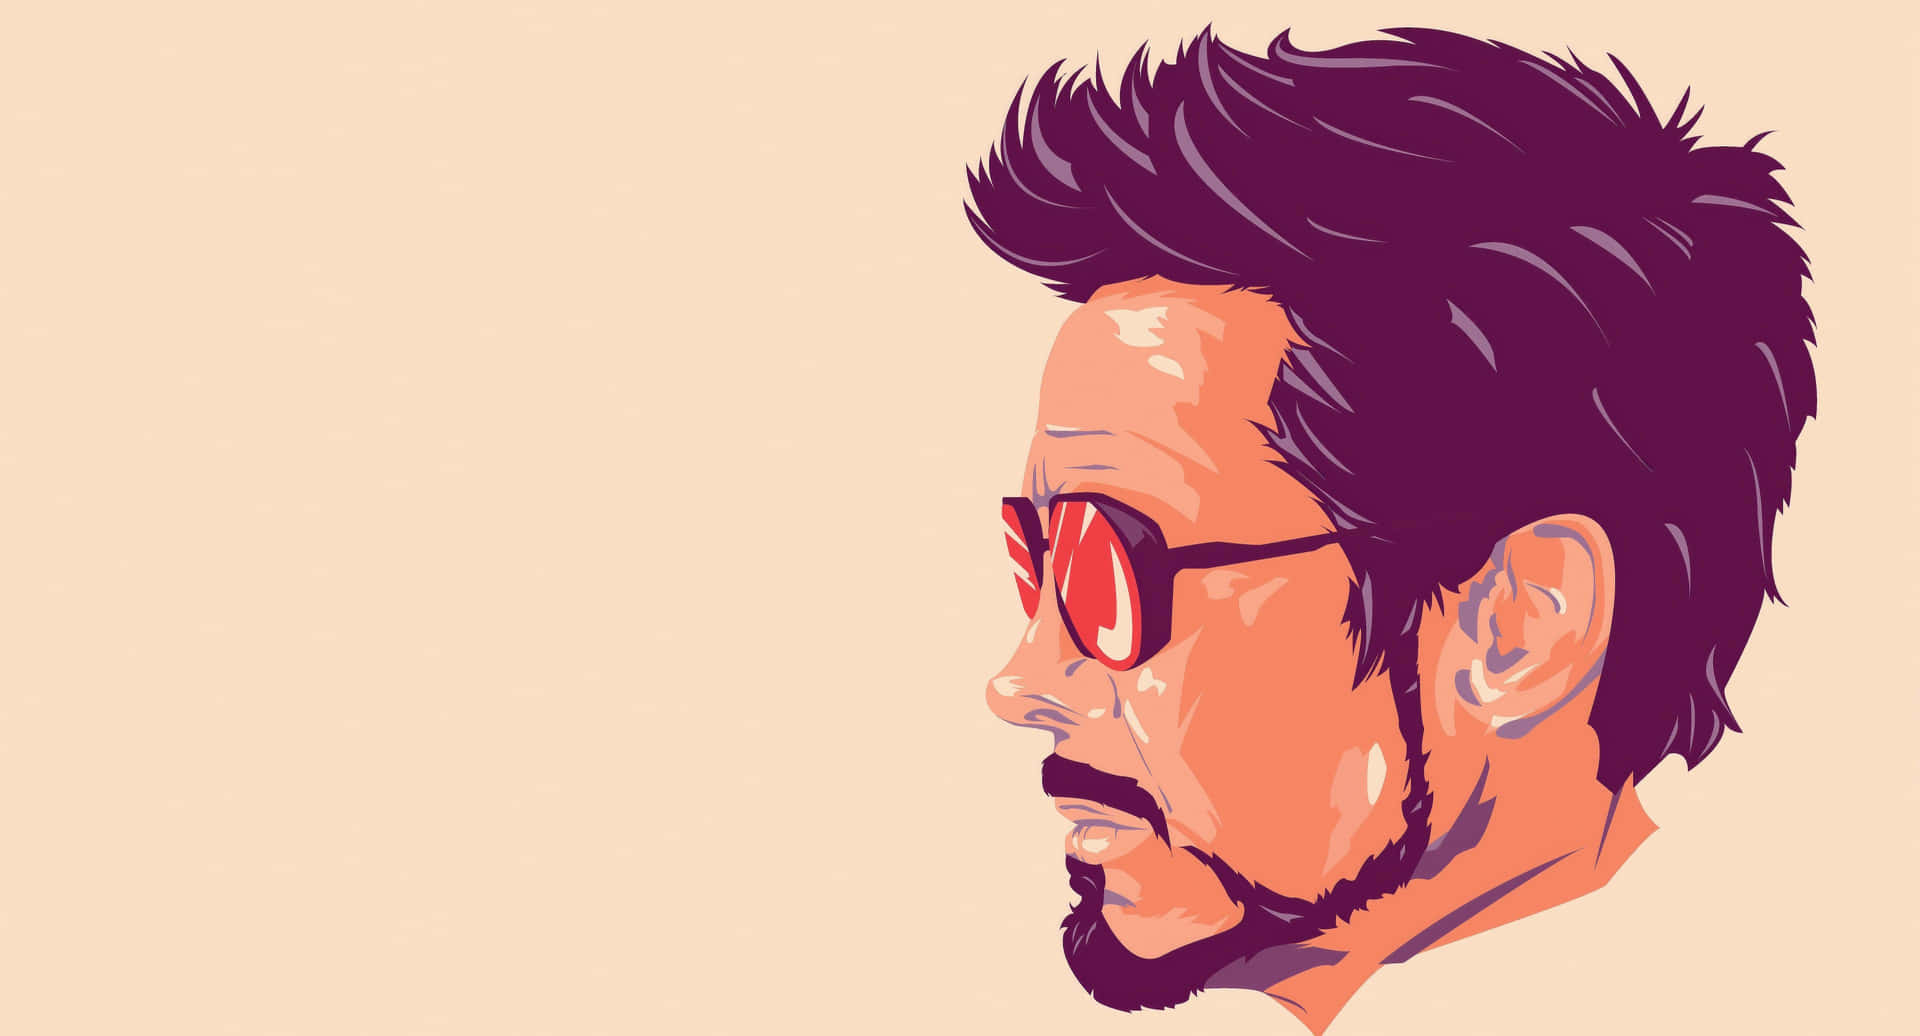 Stylized Tony Stark Profile Illustration Wallpaper